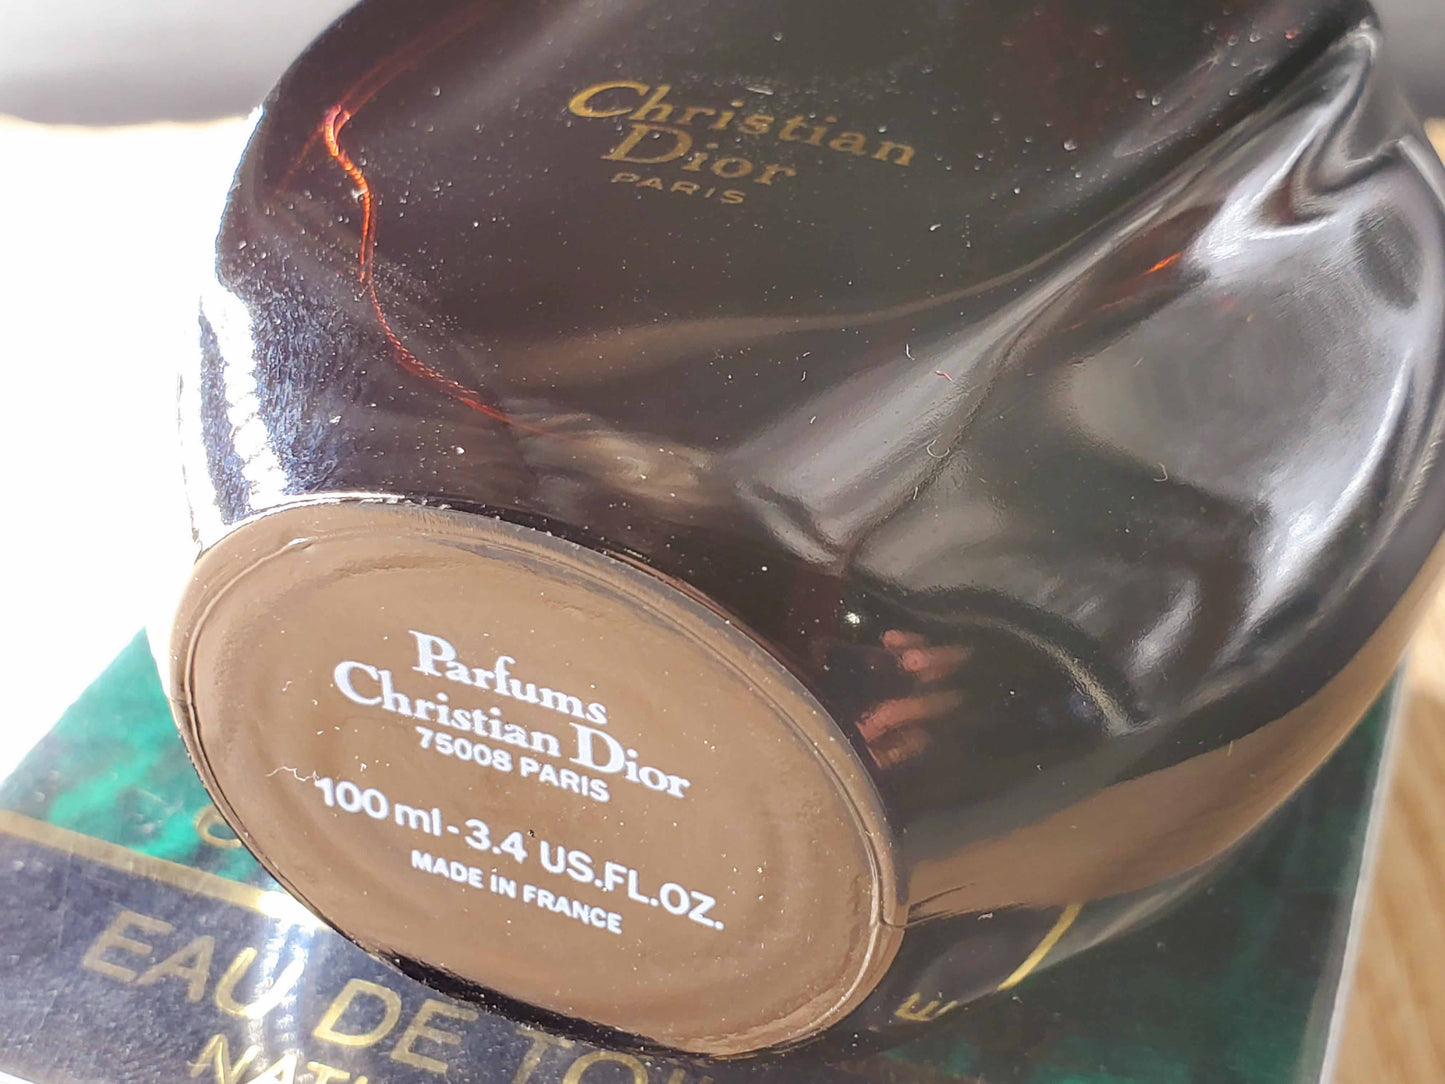 Poison Christian Dior EDT Spray 100 ml 3.4 oz, Vintage, Rare